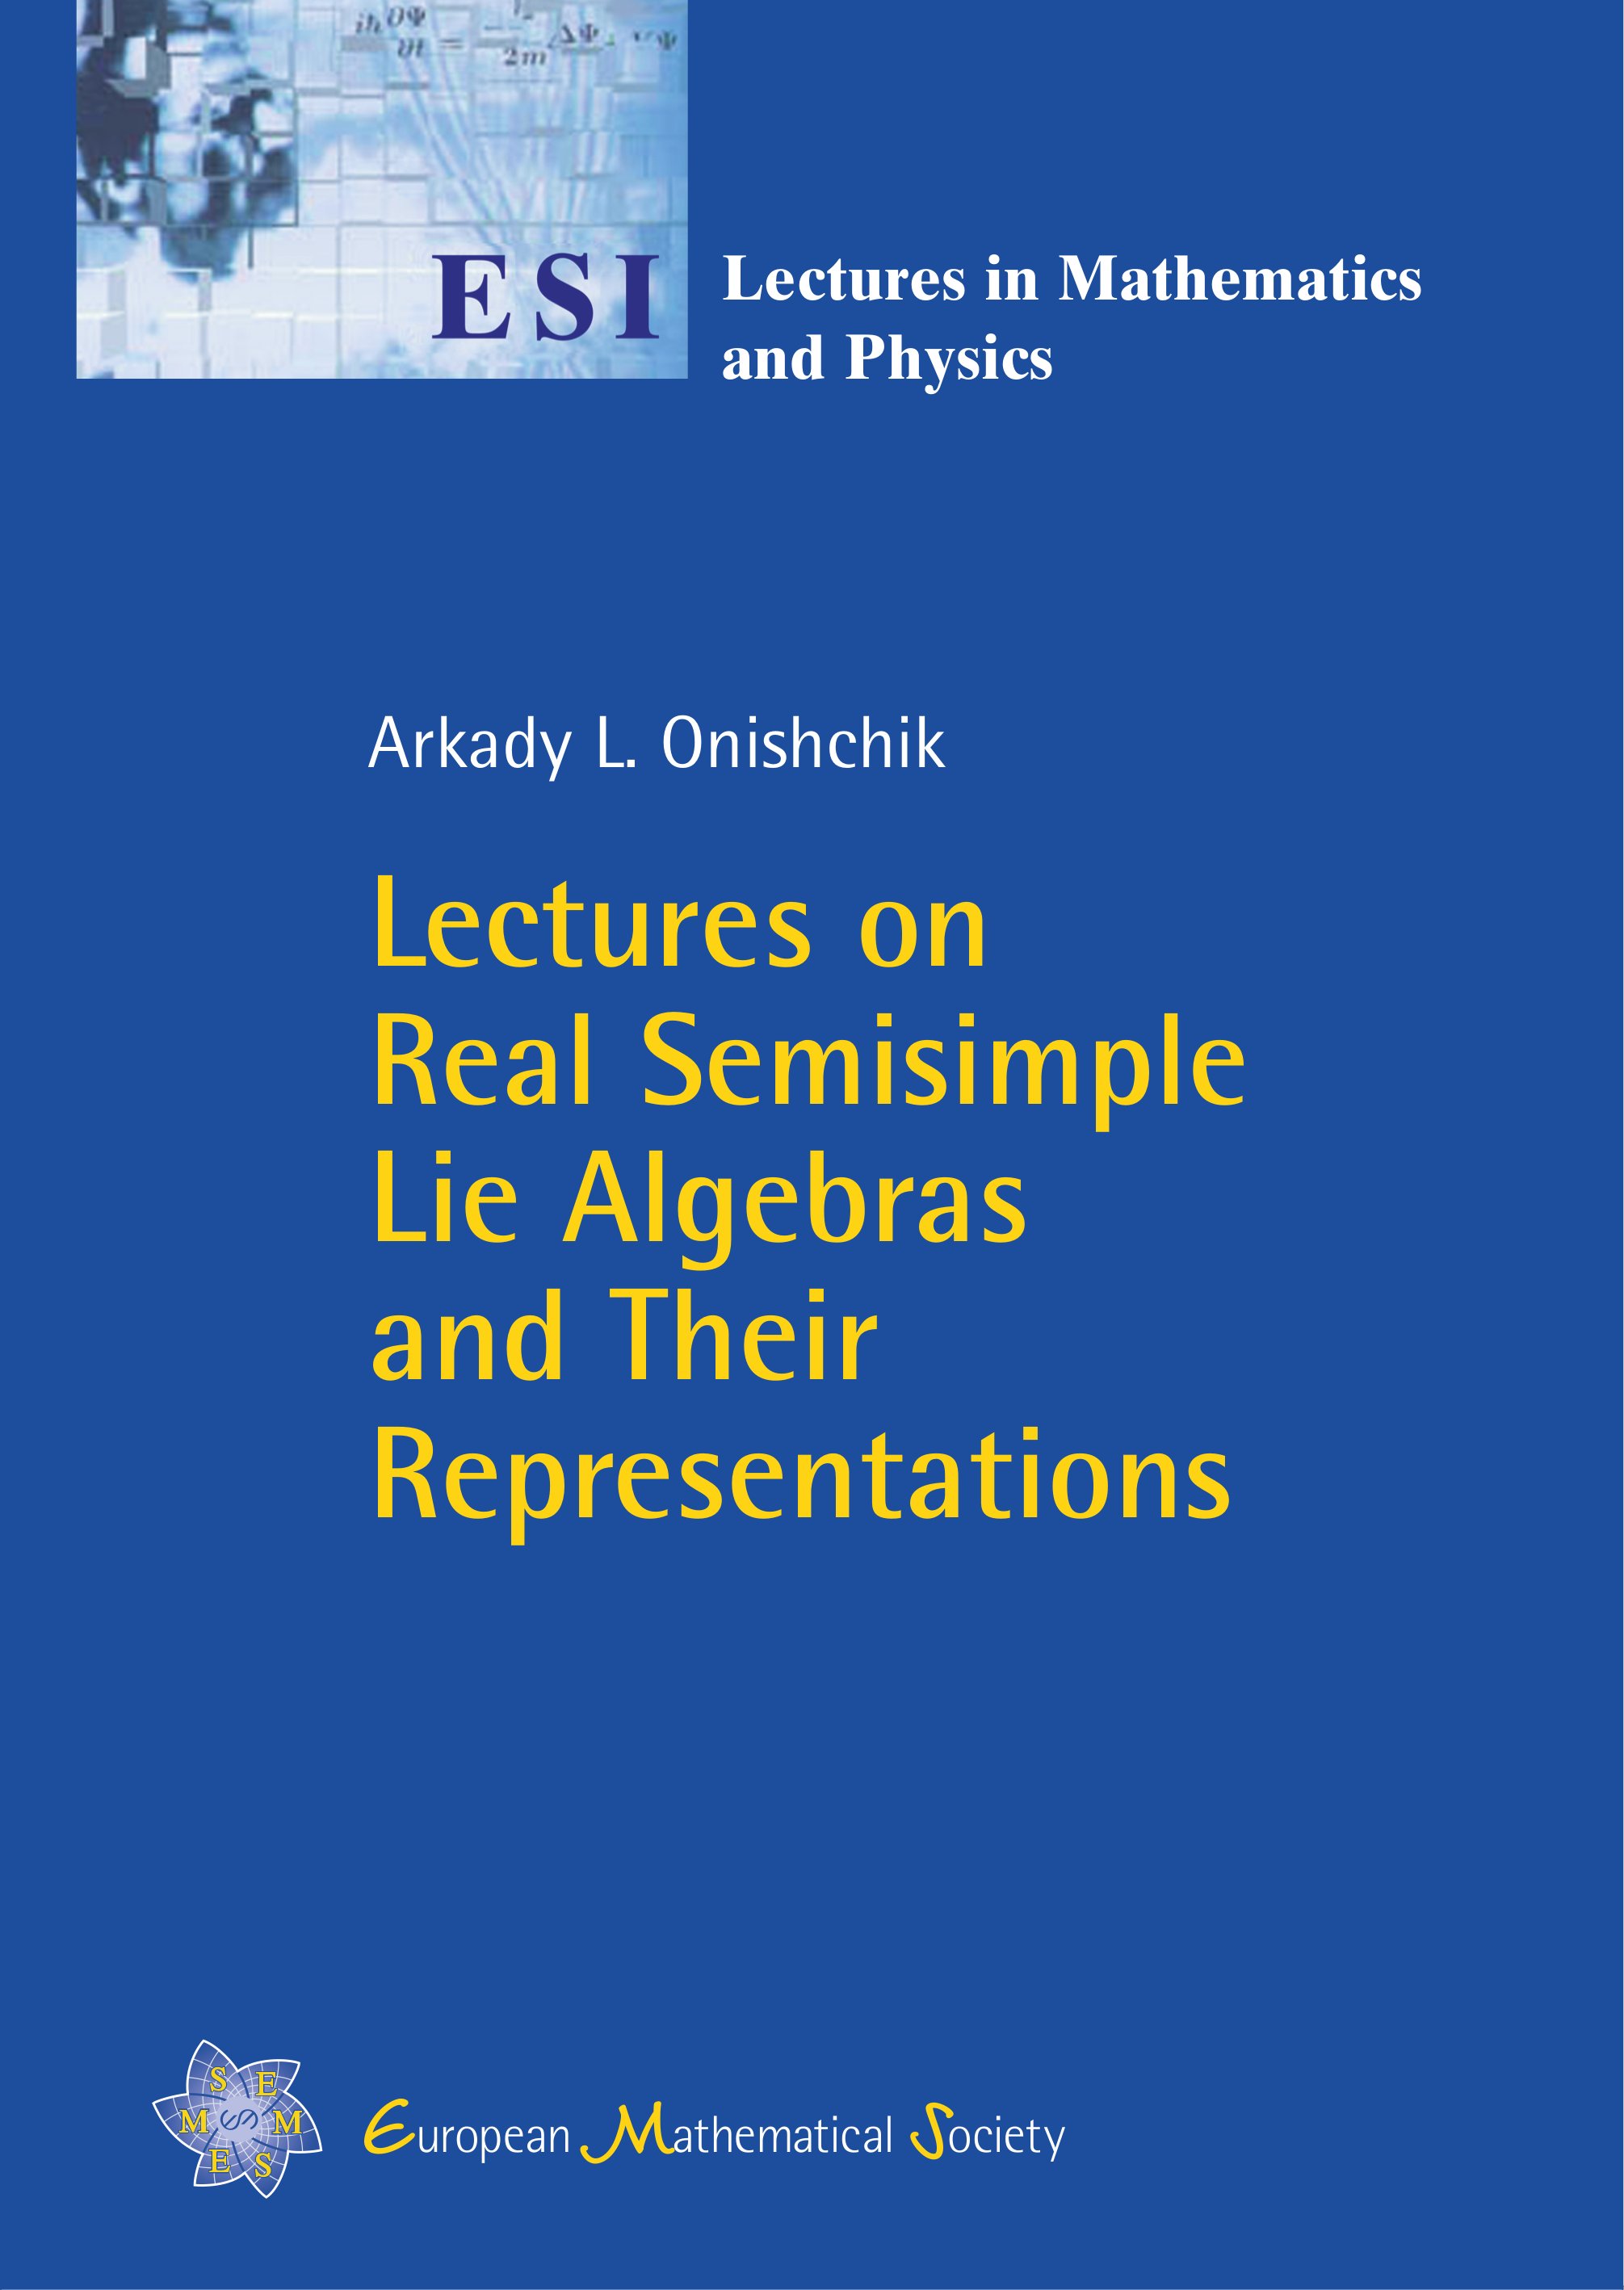 Automorphisms of complex semisimple Lie algebras cover